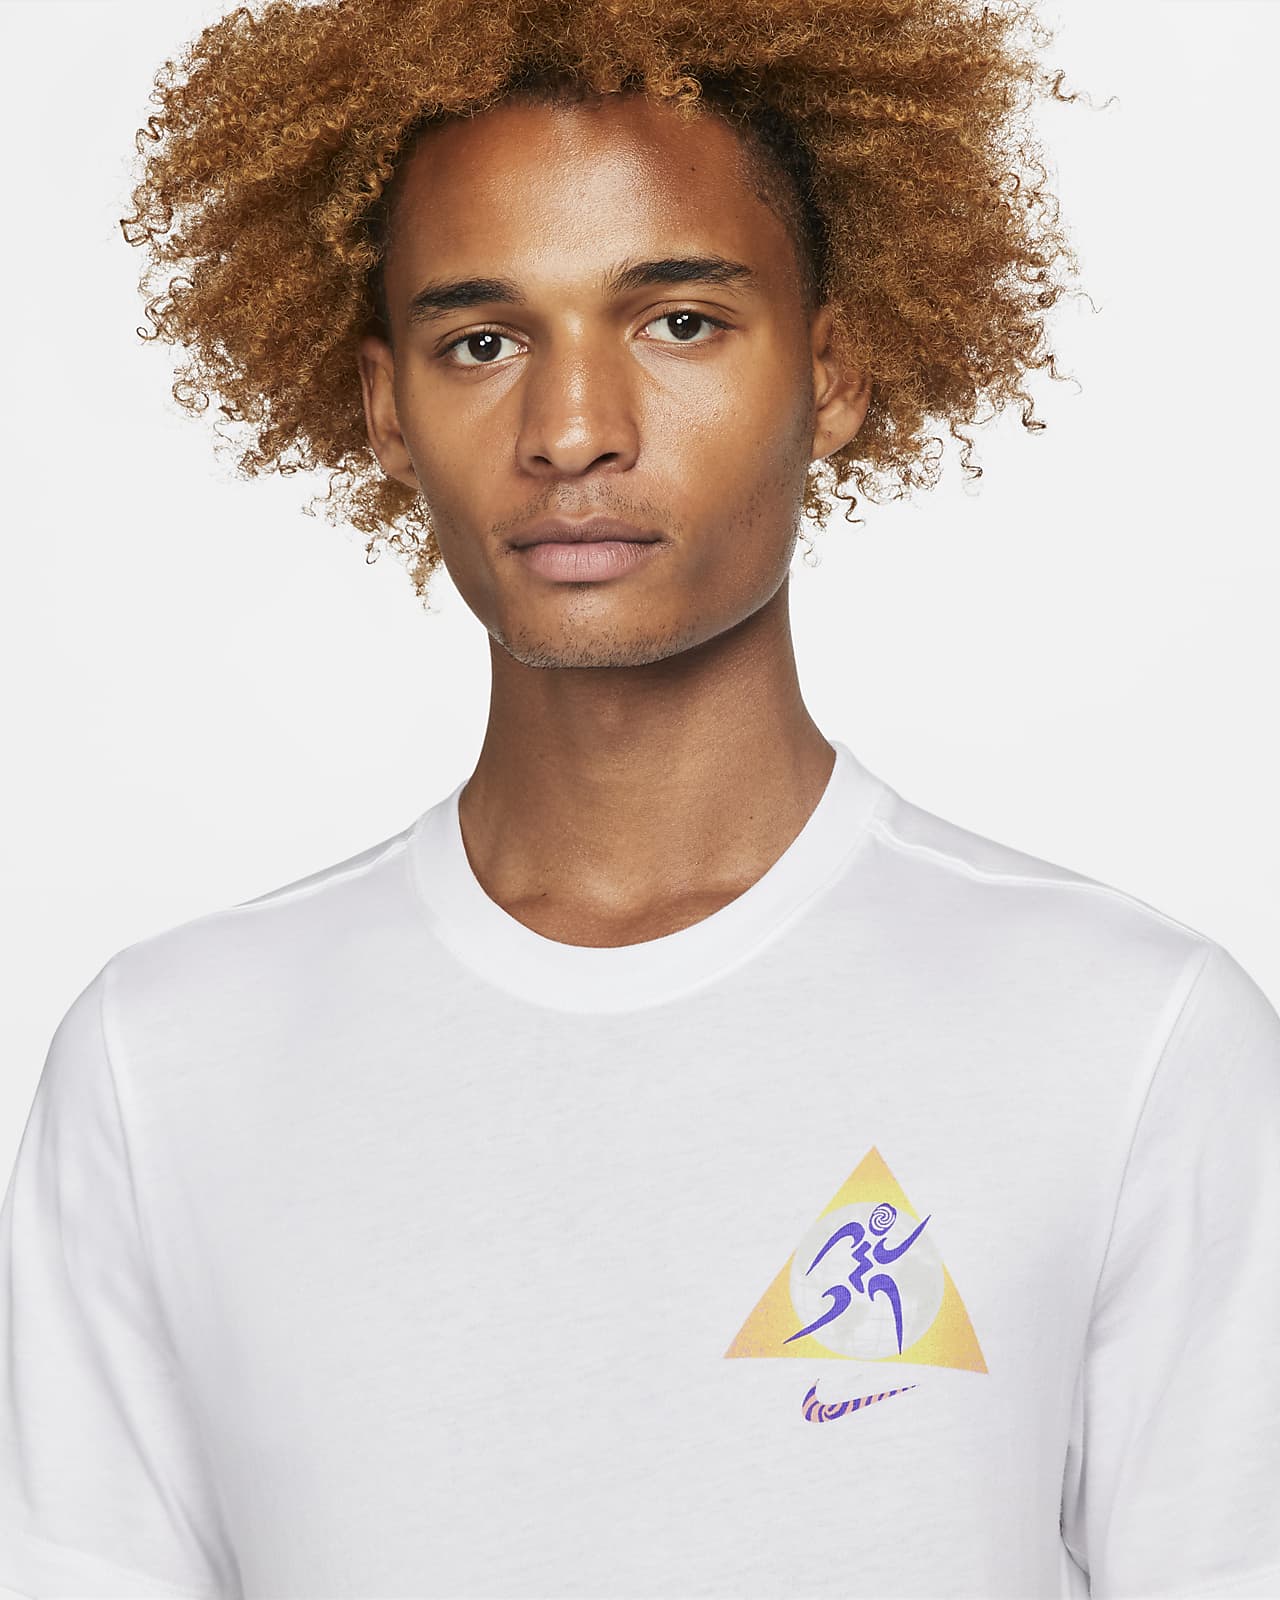 Nike Sportswear Men's T-Shirt. Nike AE